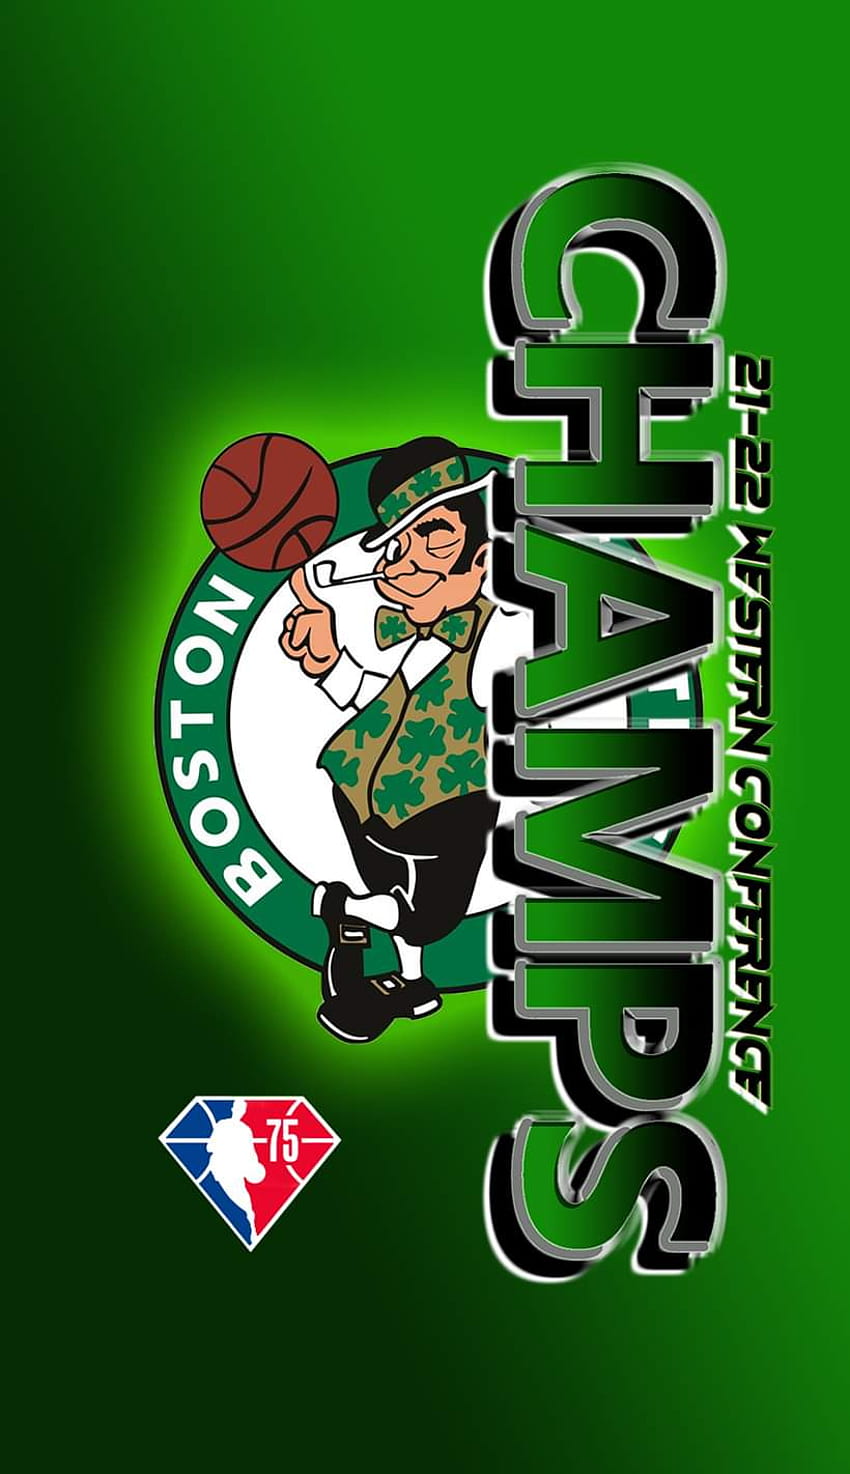 Wallpaper: Celtics Life and Team Boston wallpapers!